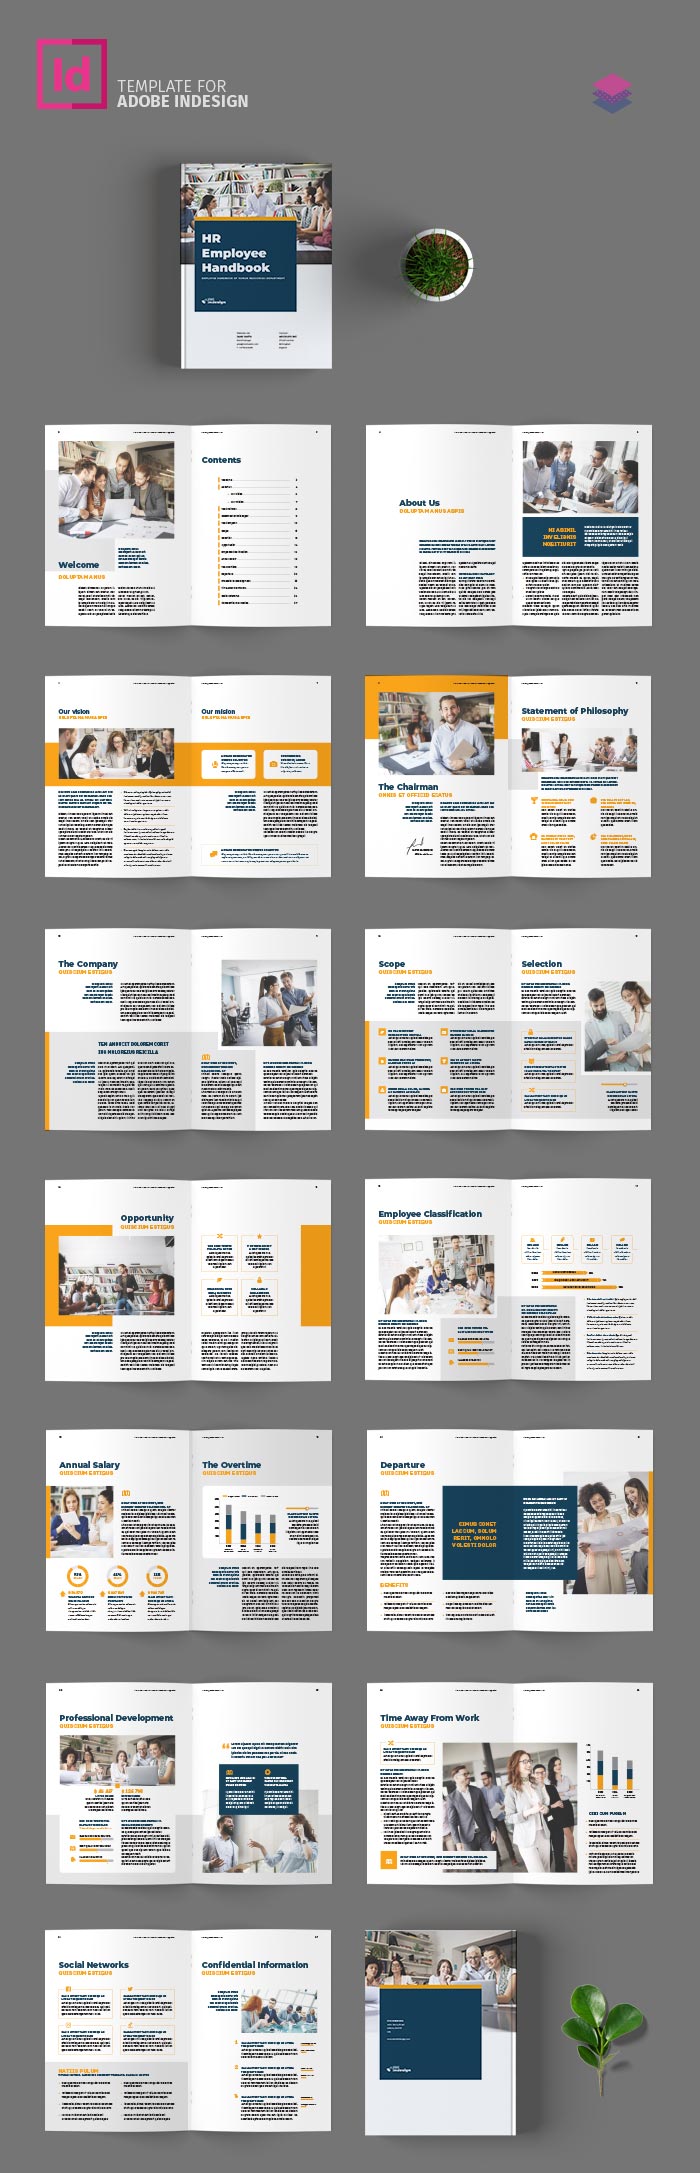 HR / Employee Handbook Template for Adobe InDesign